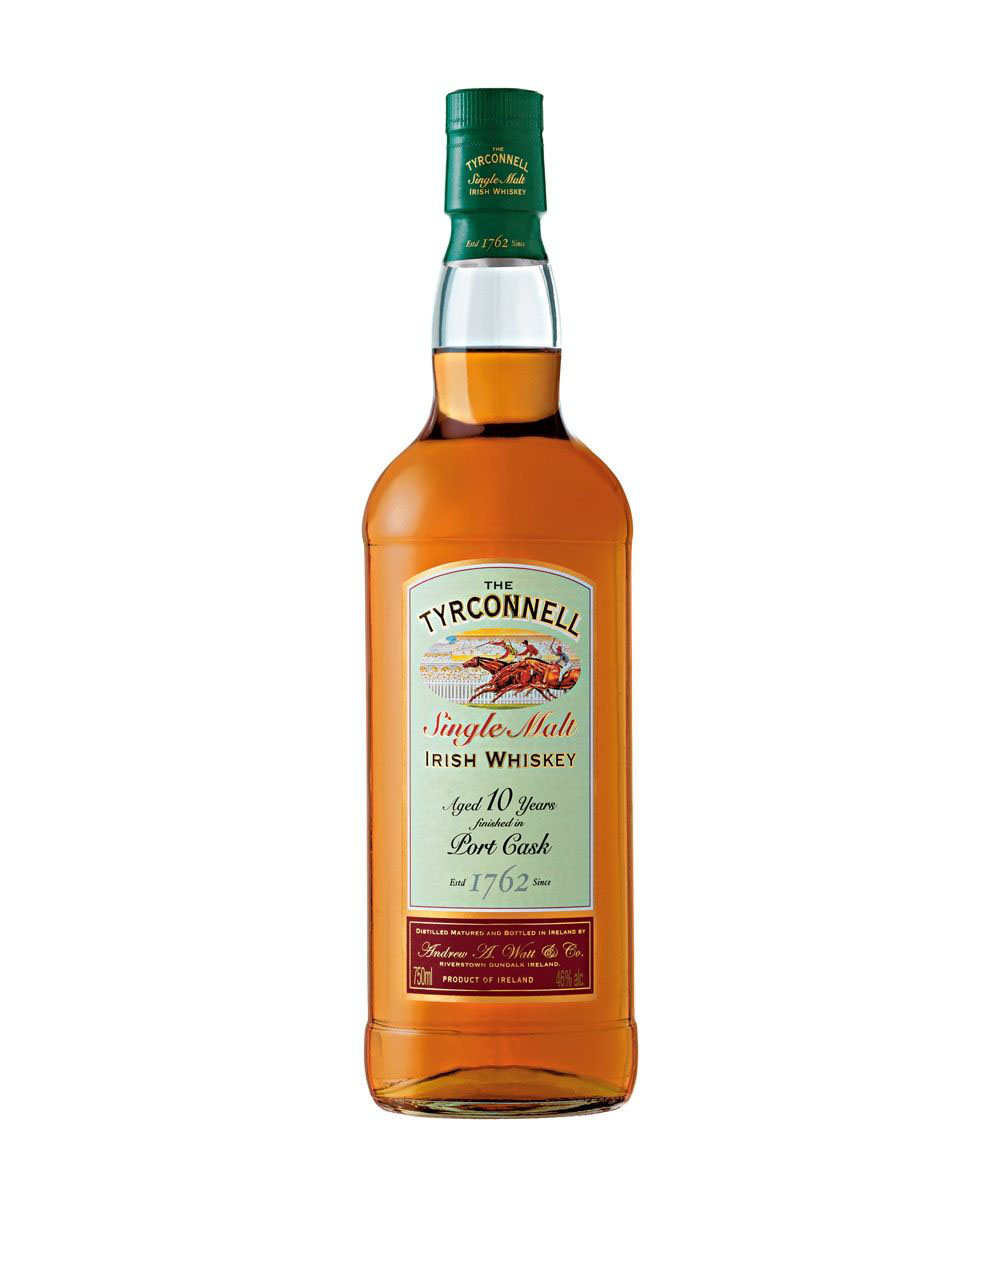 The Tyrconnell 10 Year Single Malt Irish Whiskey, Port Cask Finish